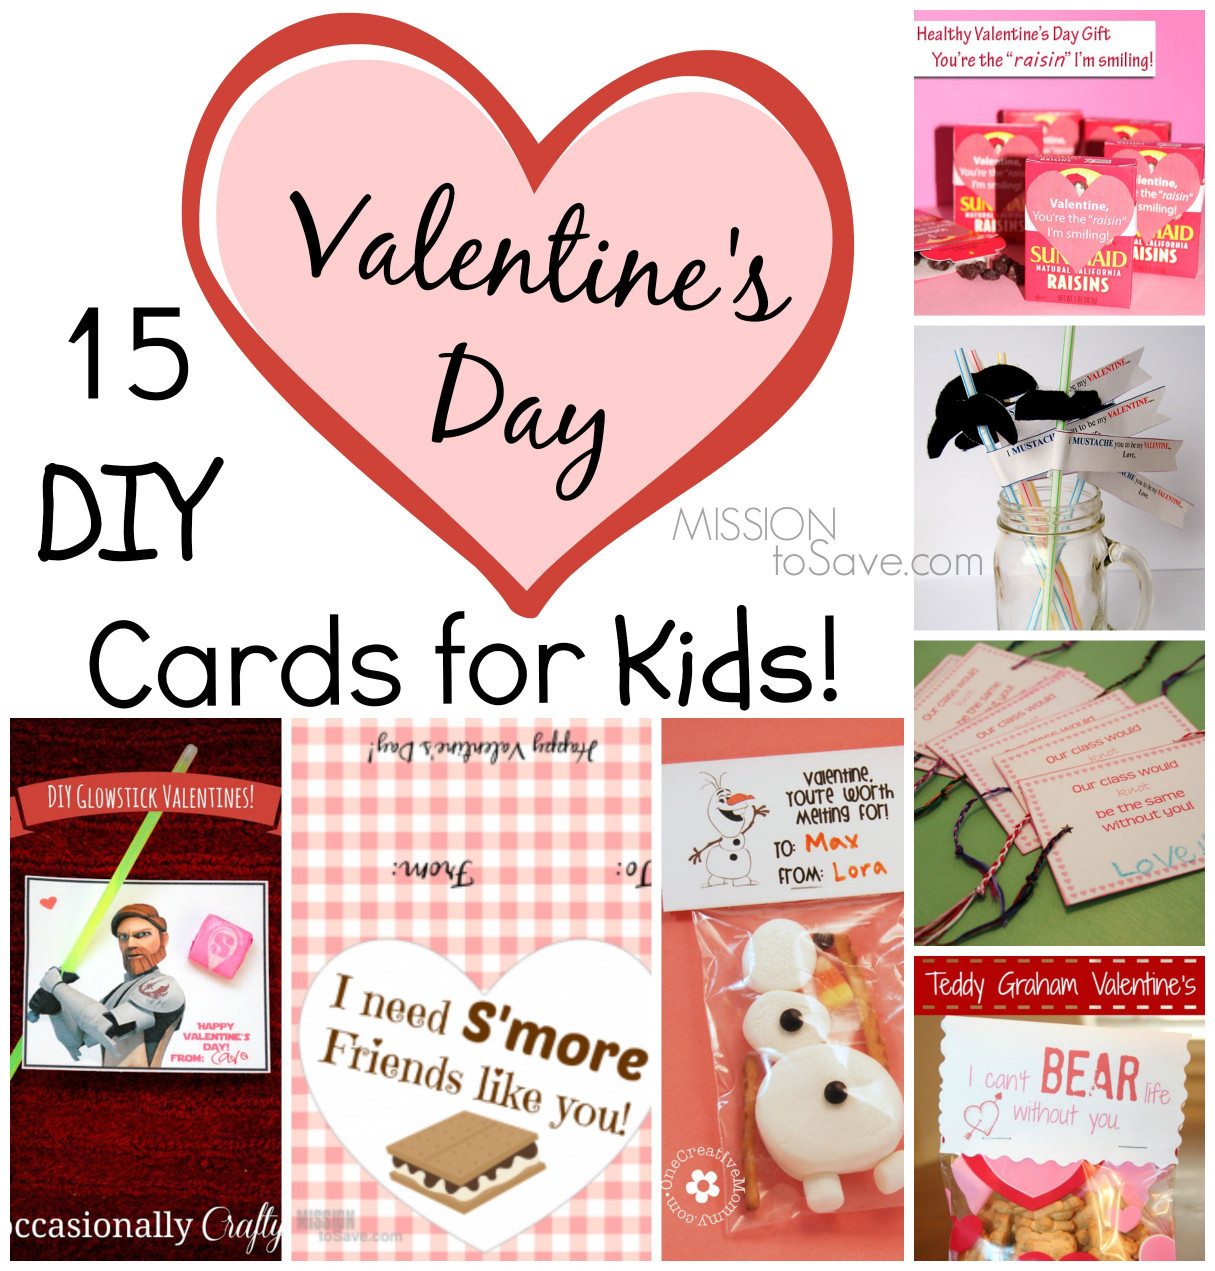 DIY Valentines Cards For Kids
 15 DIY Valentine Day Cards for Kids Mission to Save